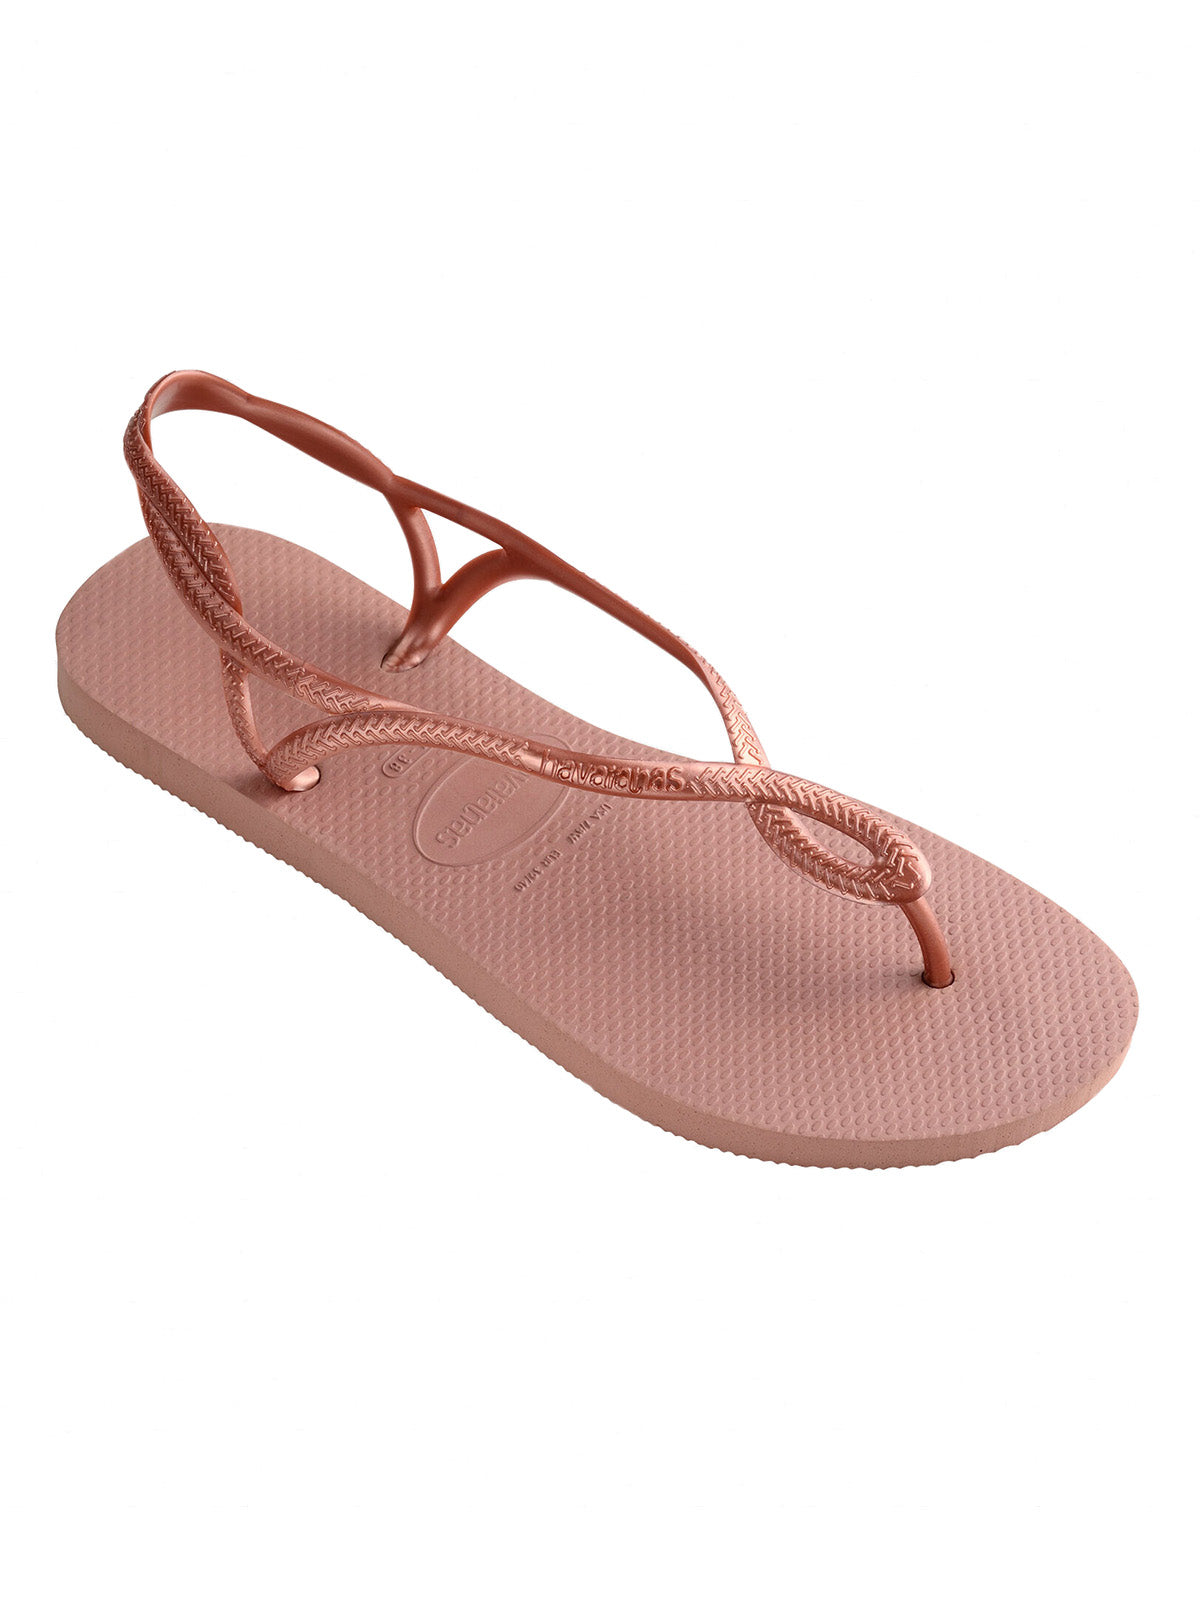 Havaianas Women's Sandals - Havaianas Luna - Pink